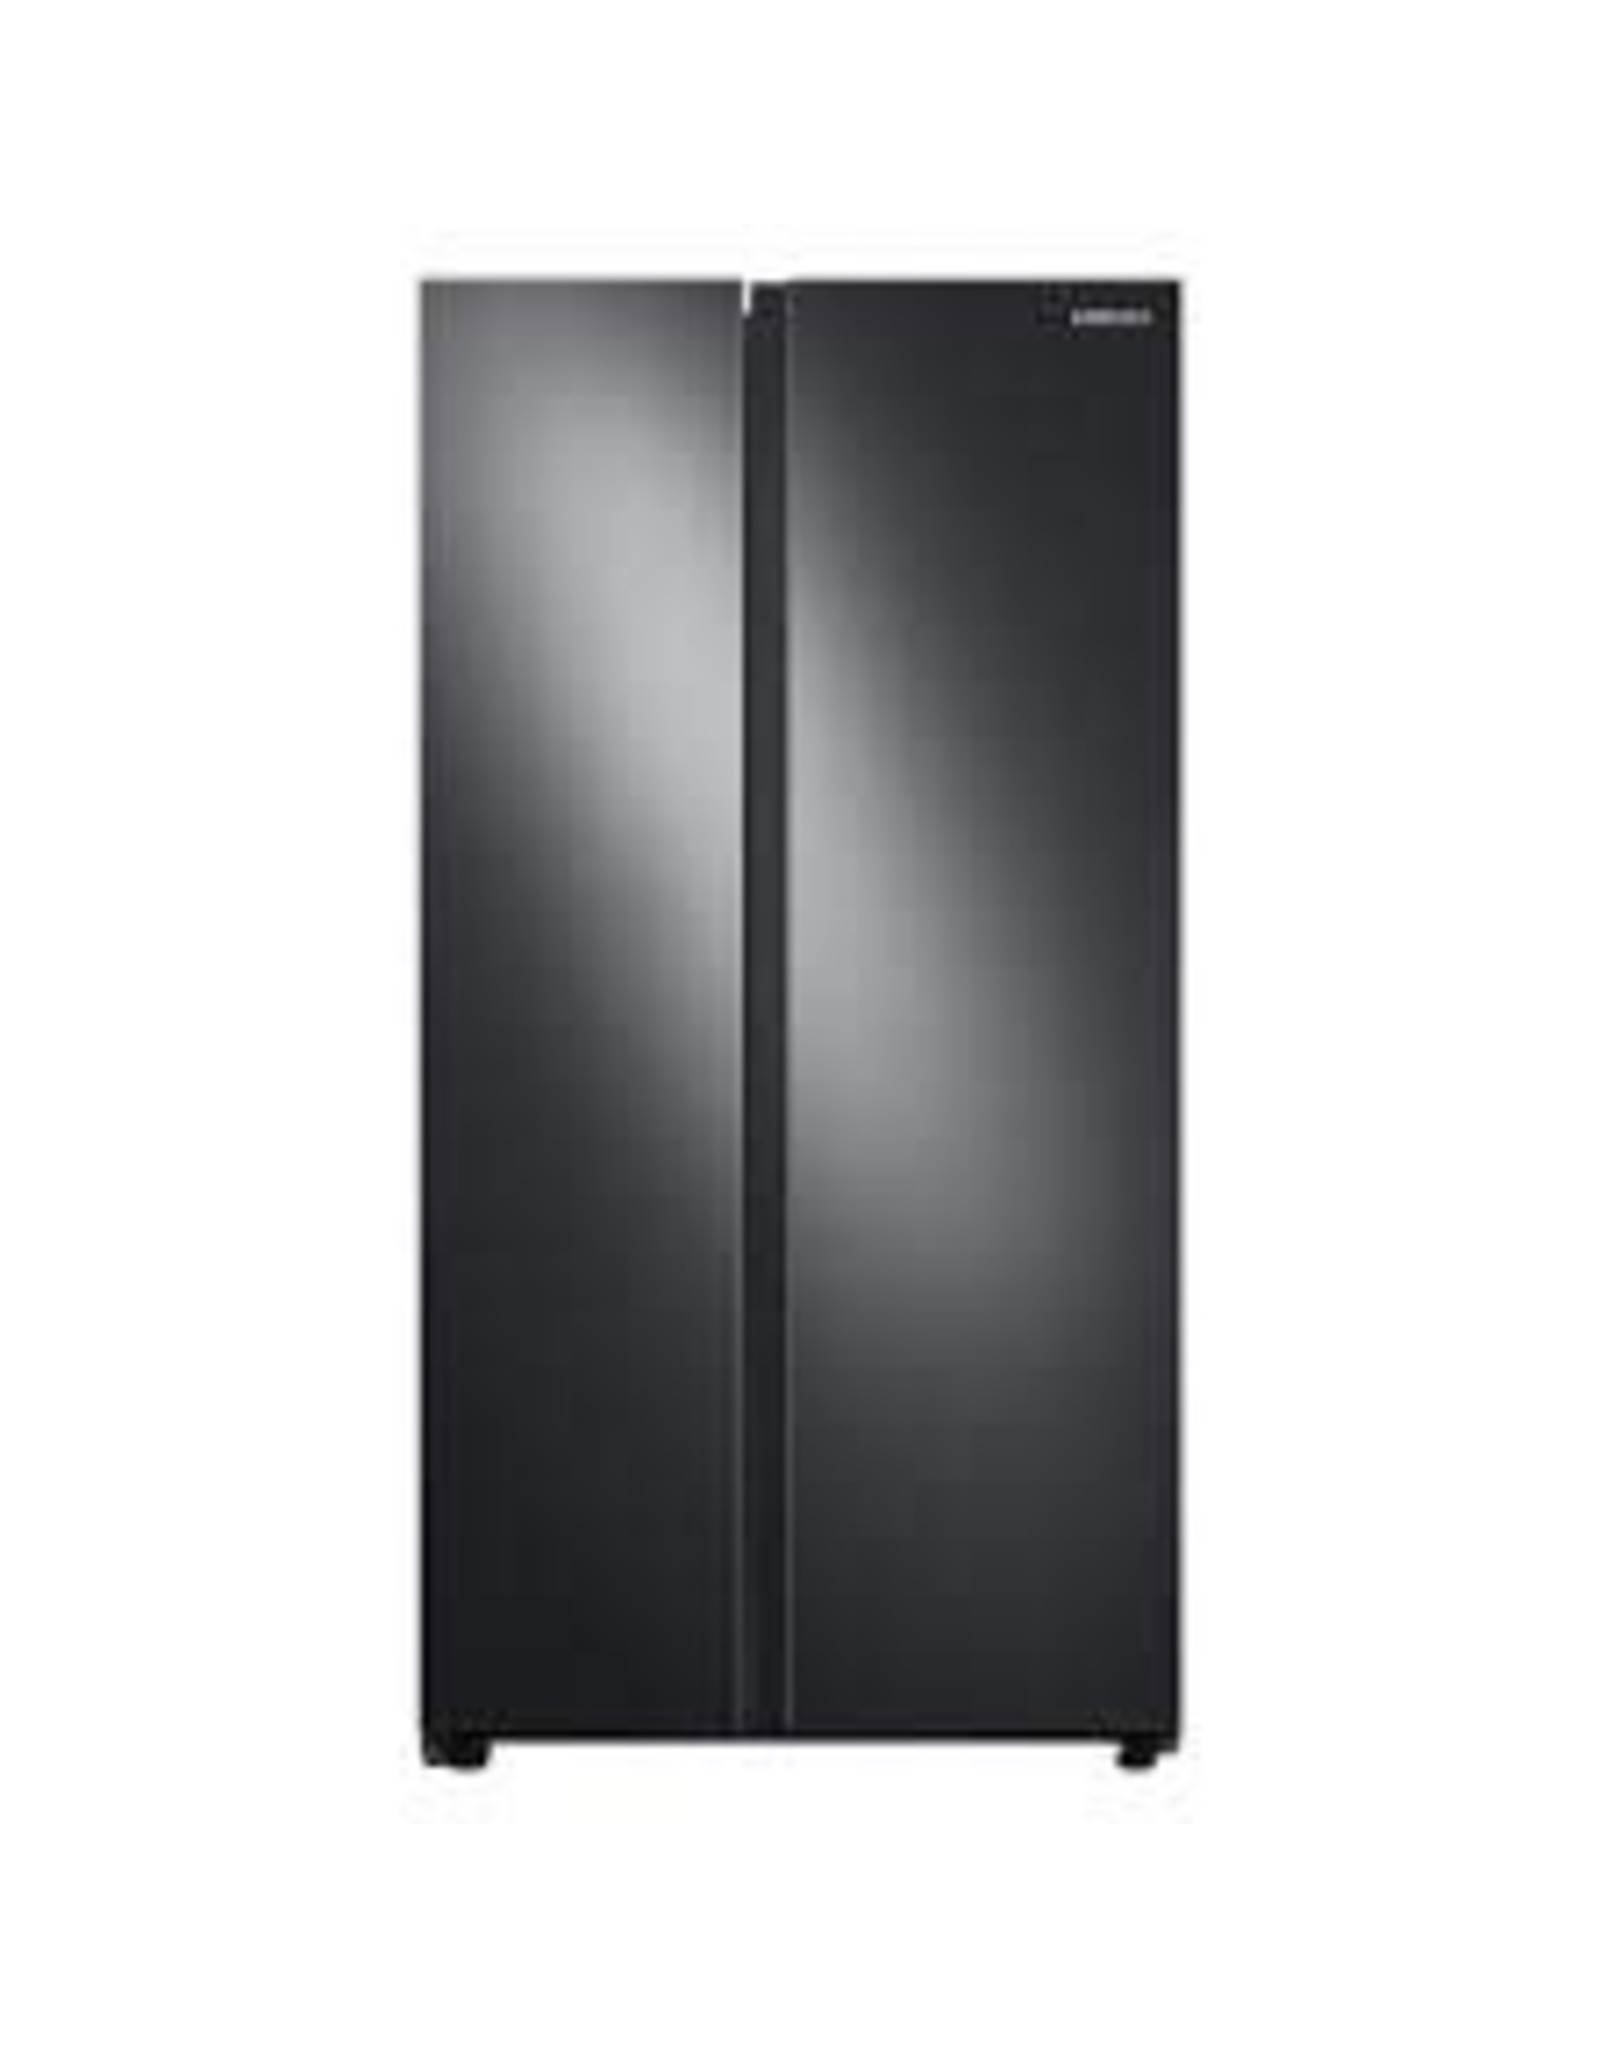 SAMSUNG RS28A500ASG  28 cu. ft. Smart Side-by-Side Refrigerator in Fingerprint Resistant Black Stainless Steel